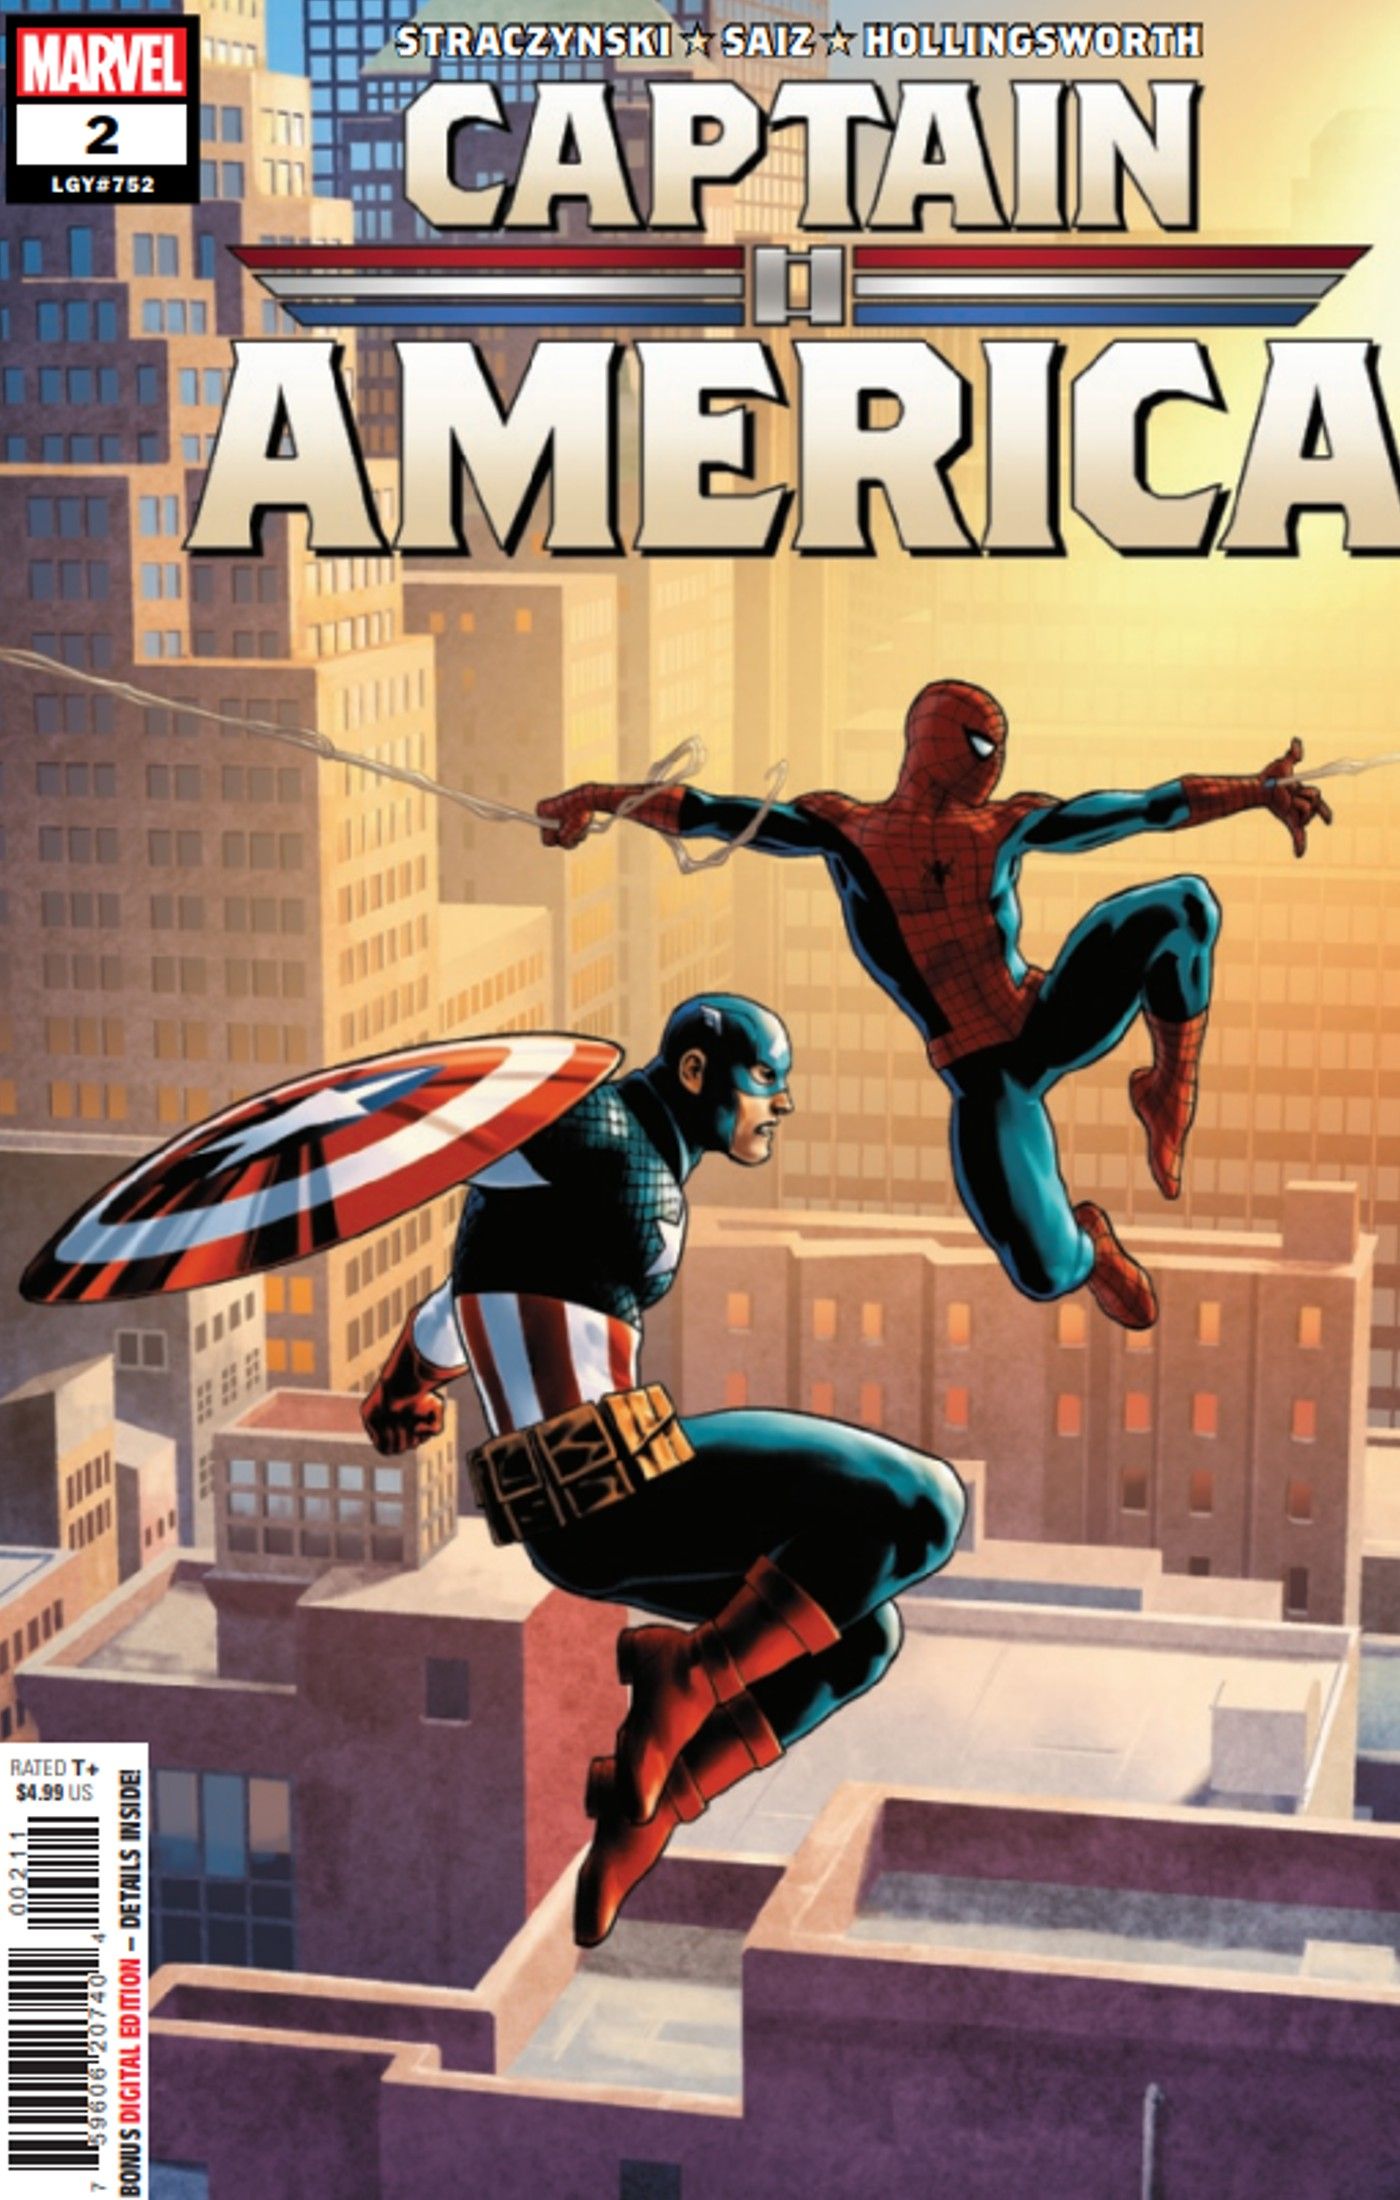 Captain America Admits the Secret Reason Spider-Man Creeps Him Out